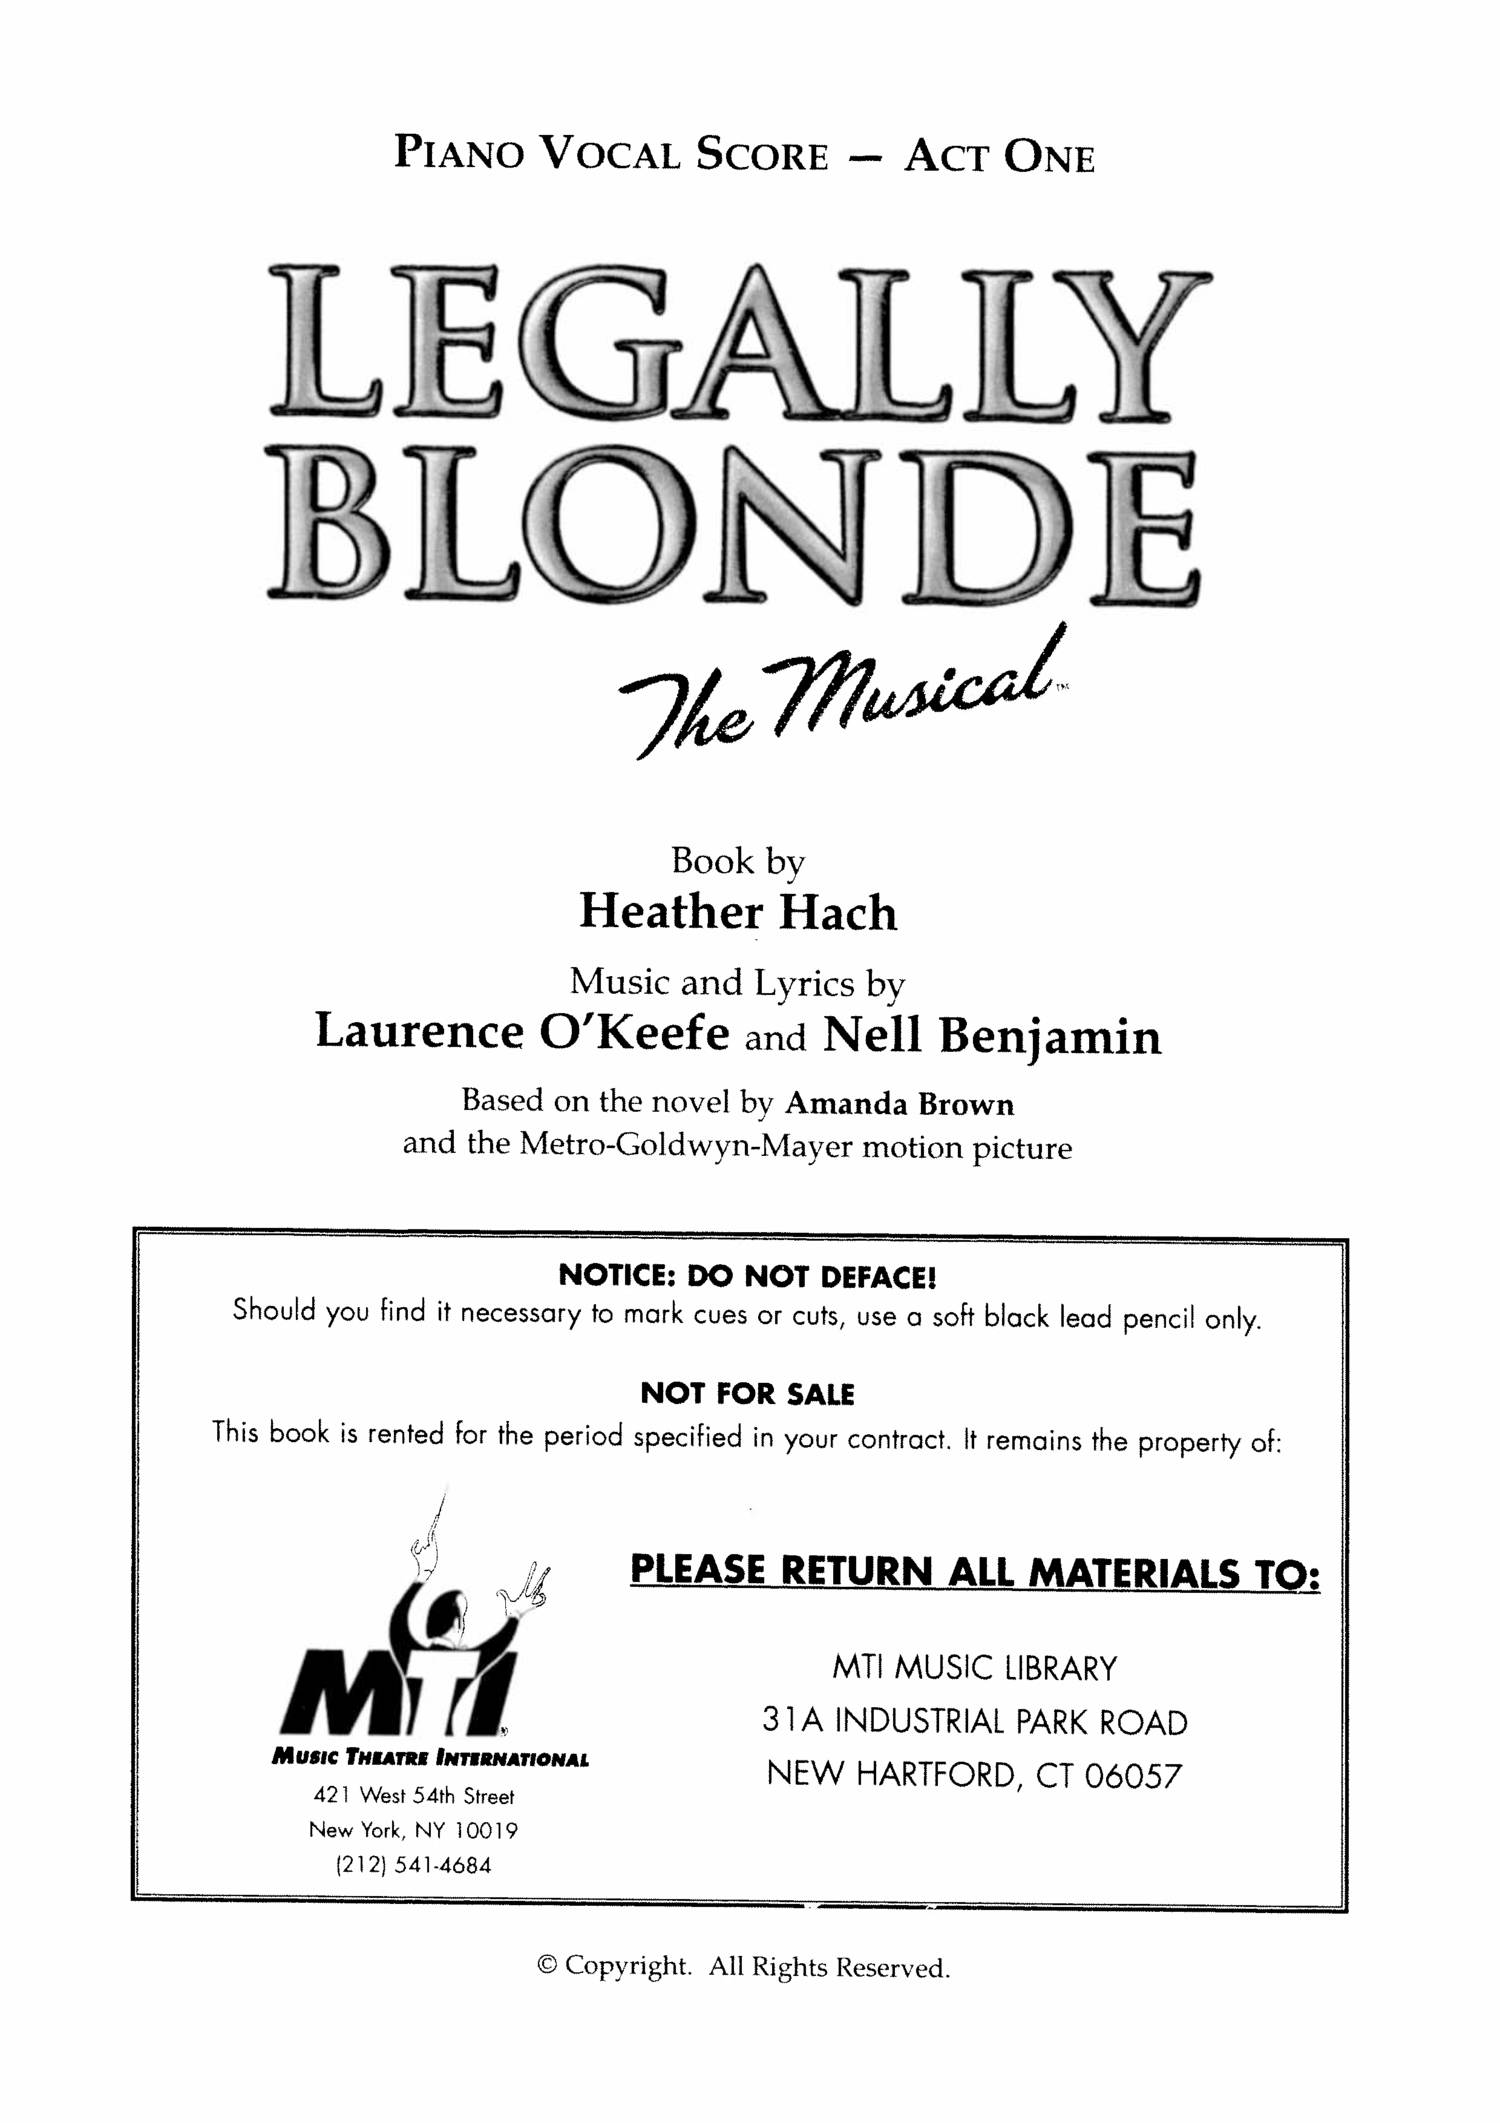 Legally Blonde - Score.pdf | DocDroid